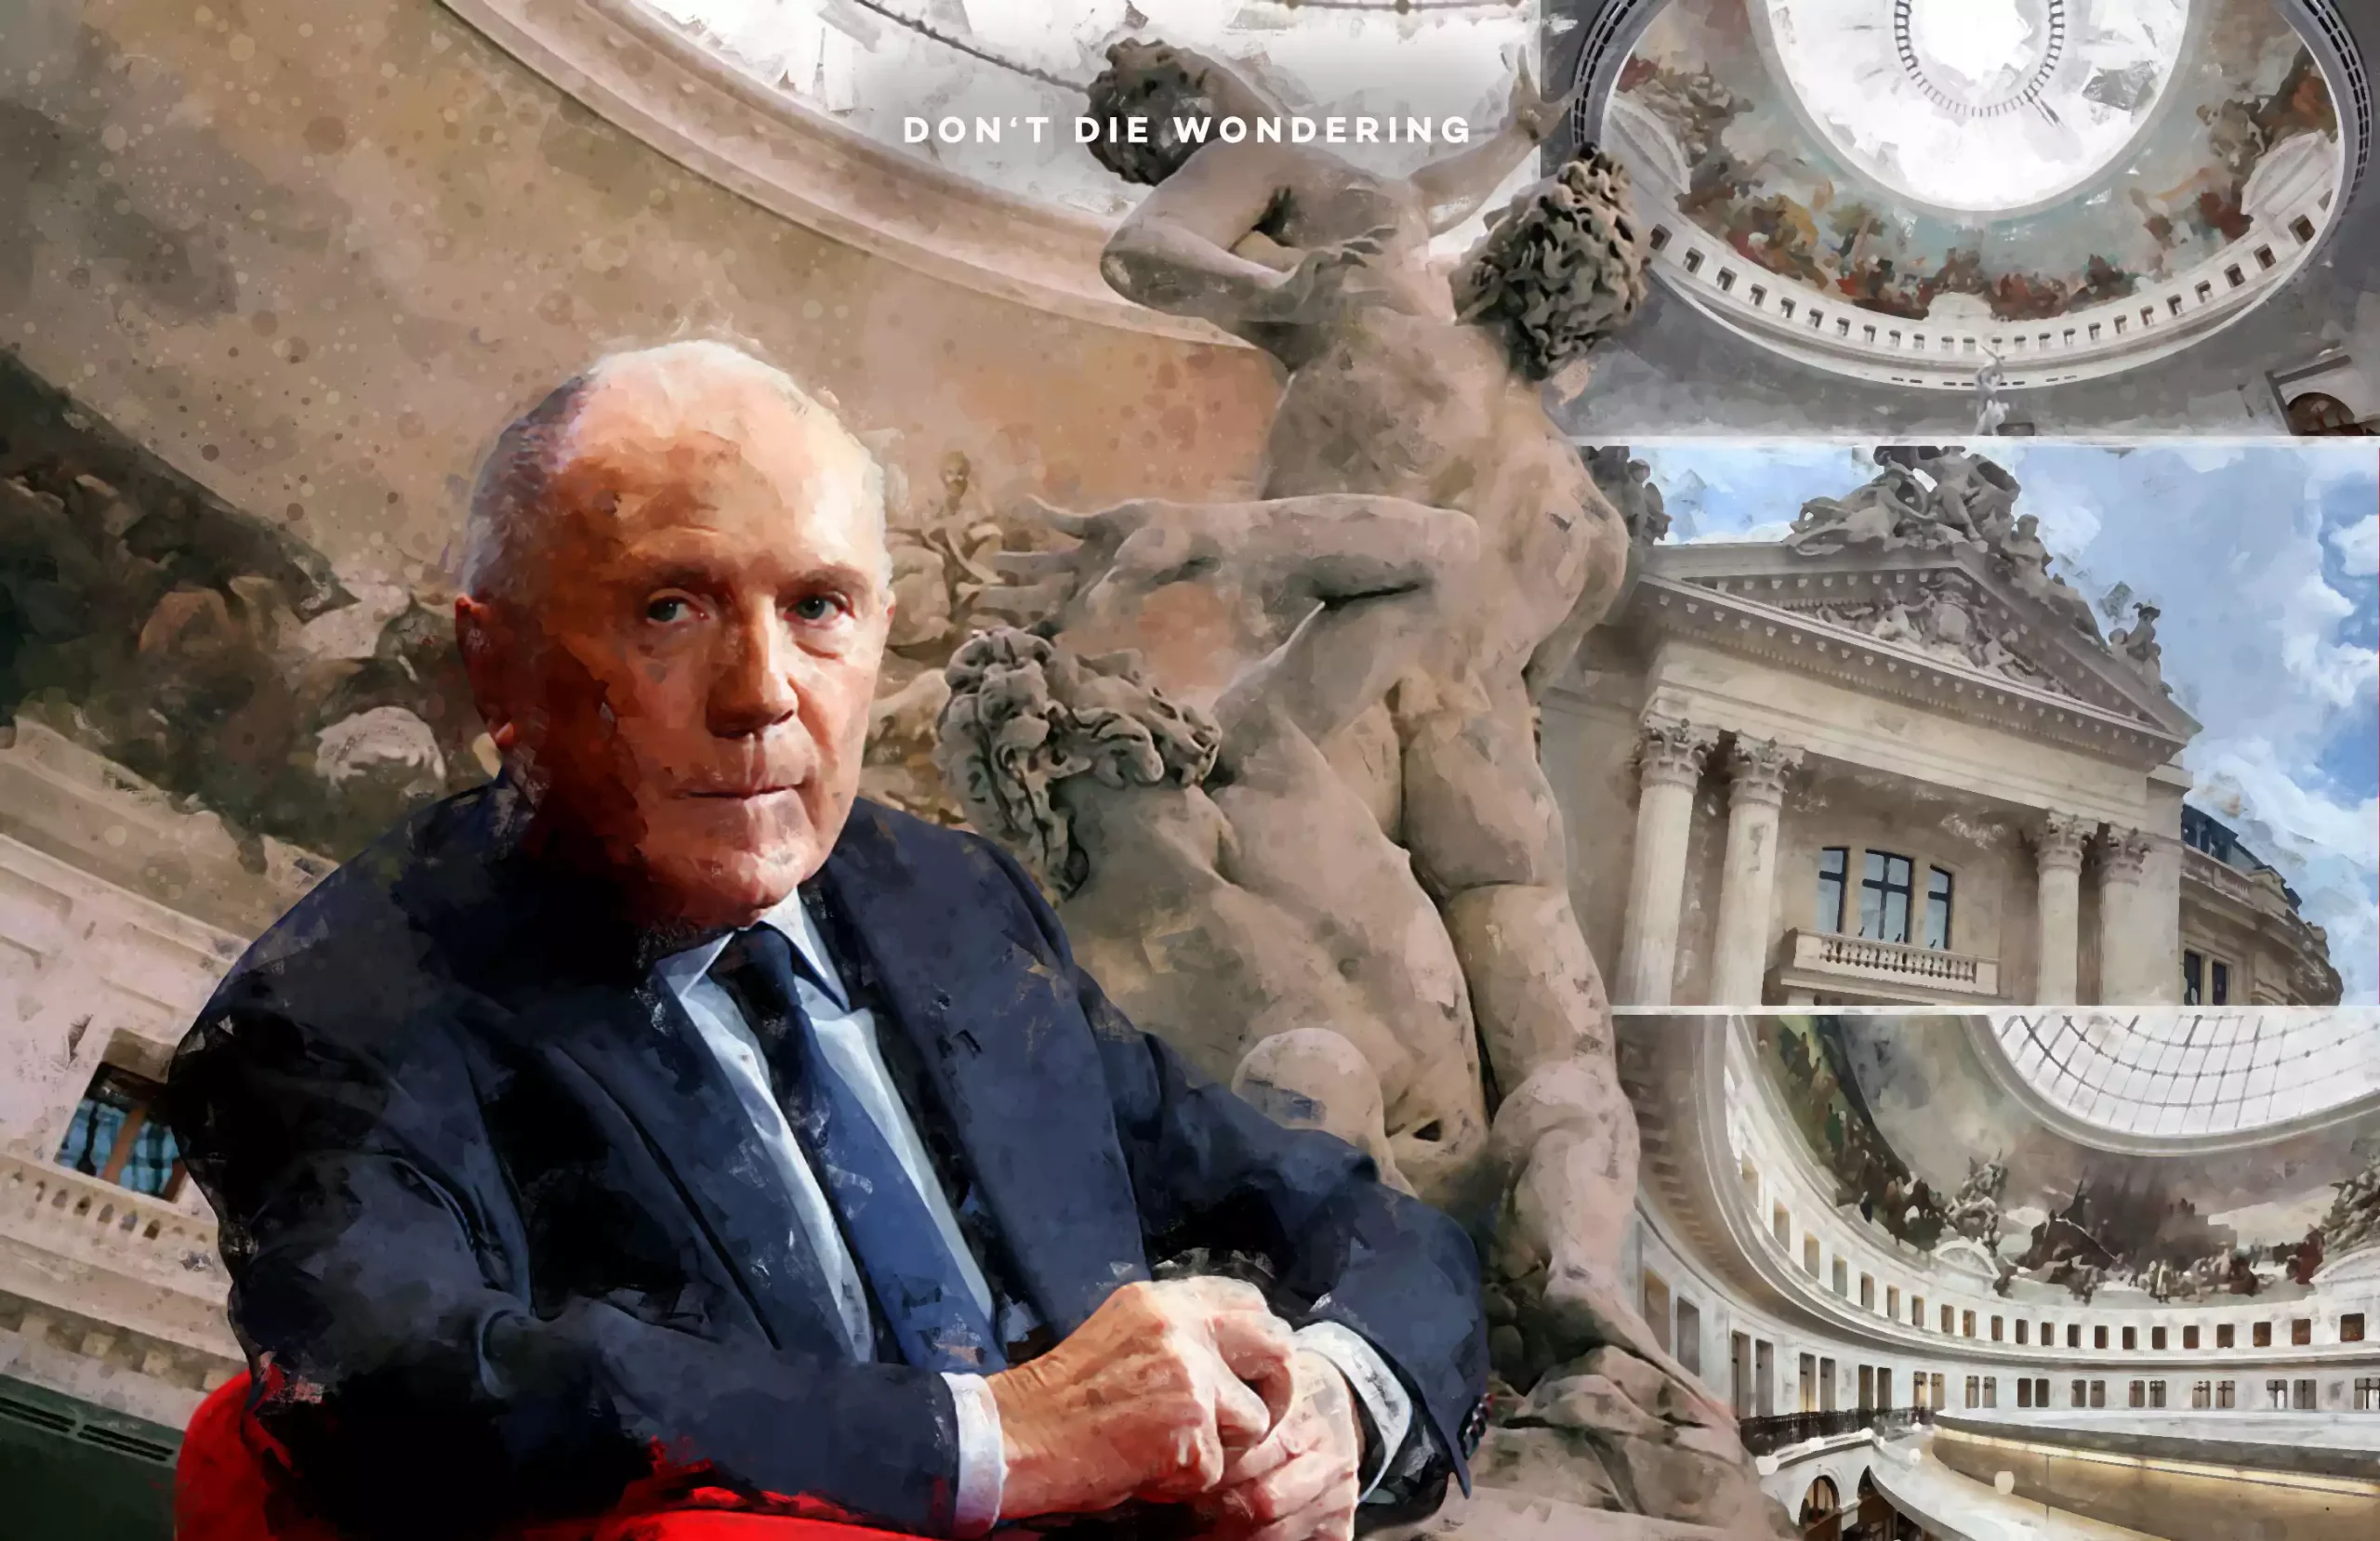 New Paris museum to house billionaire's modern art collection